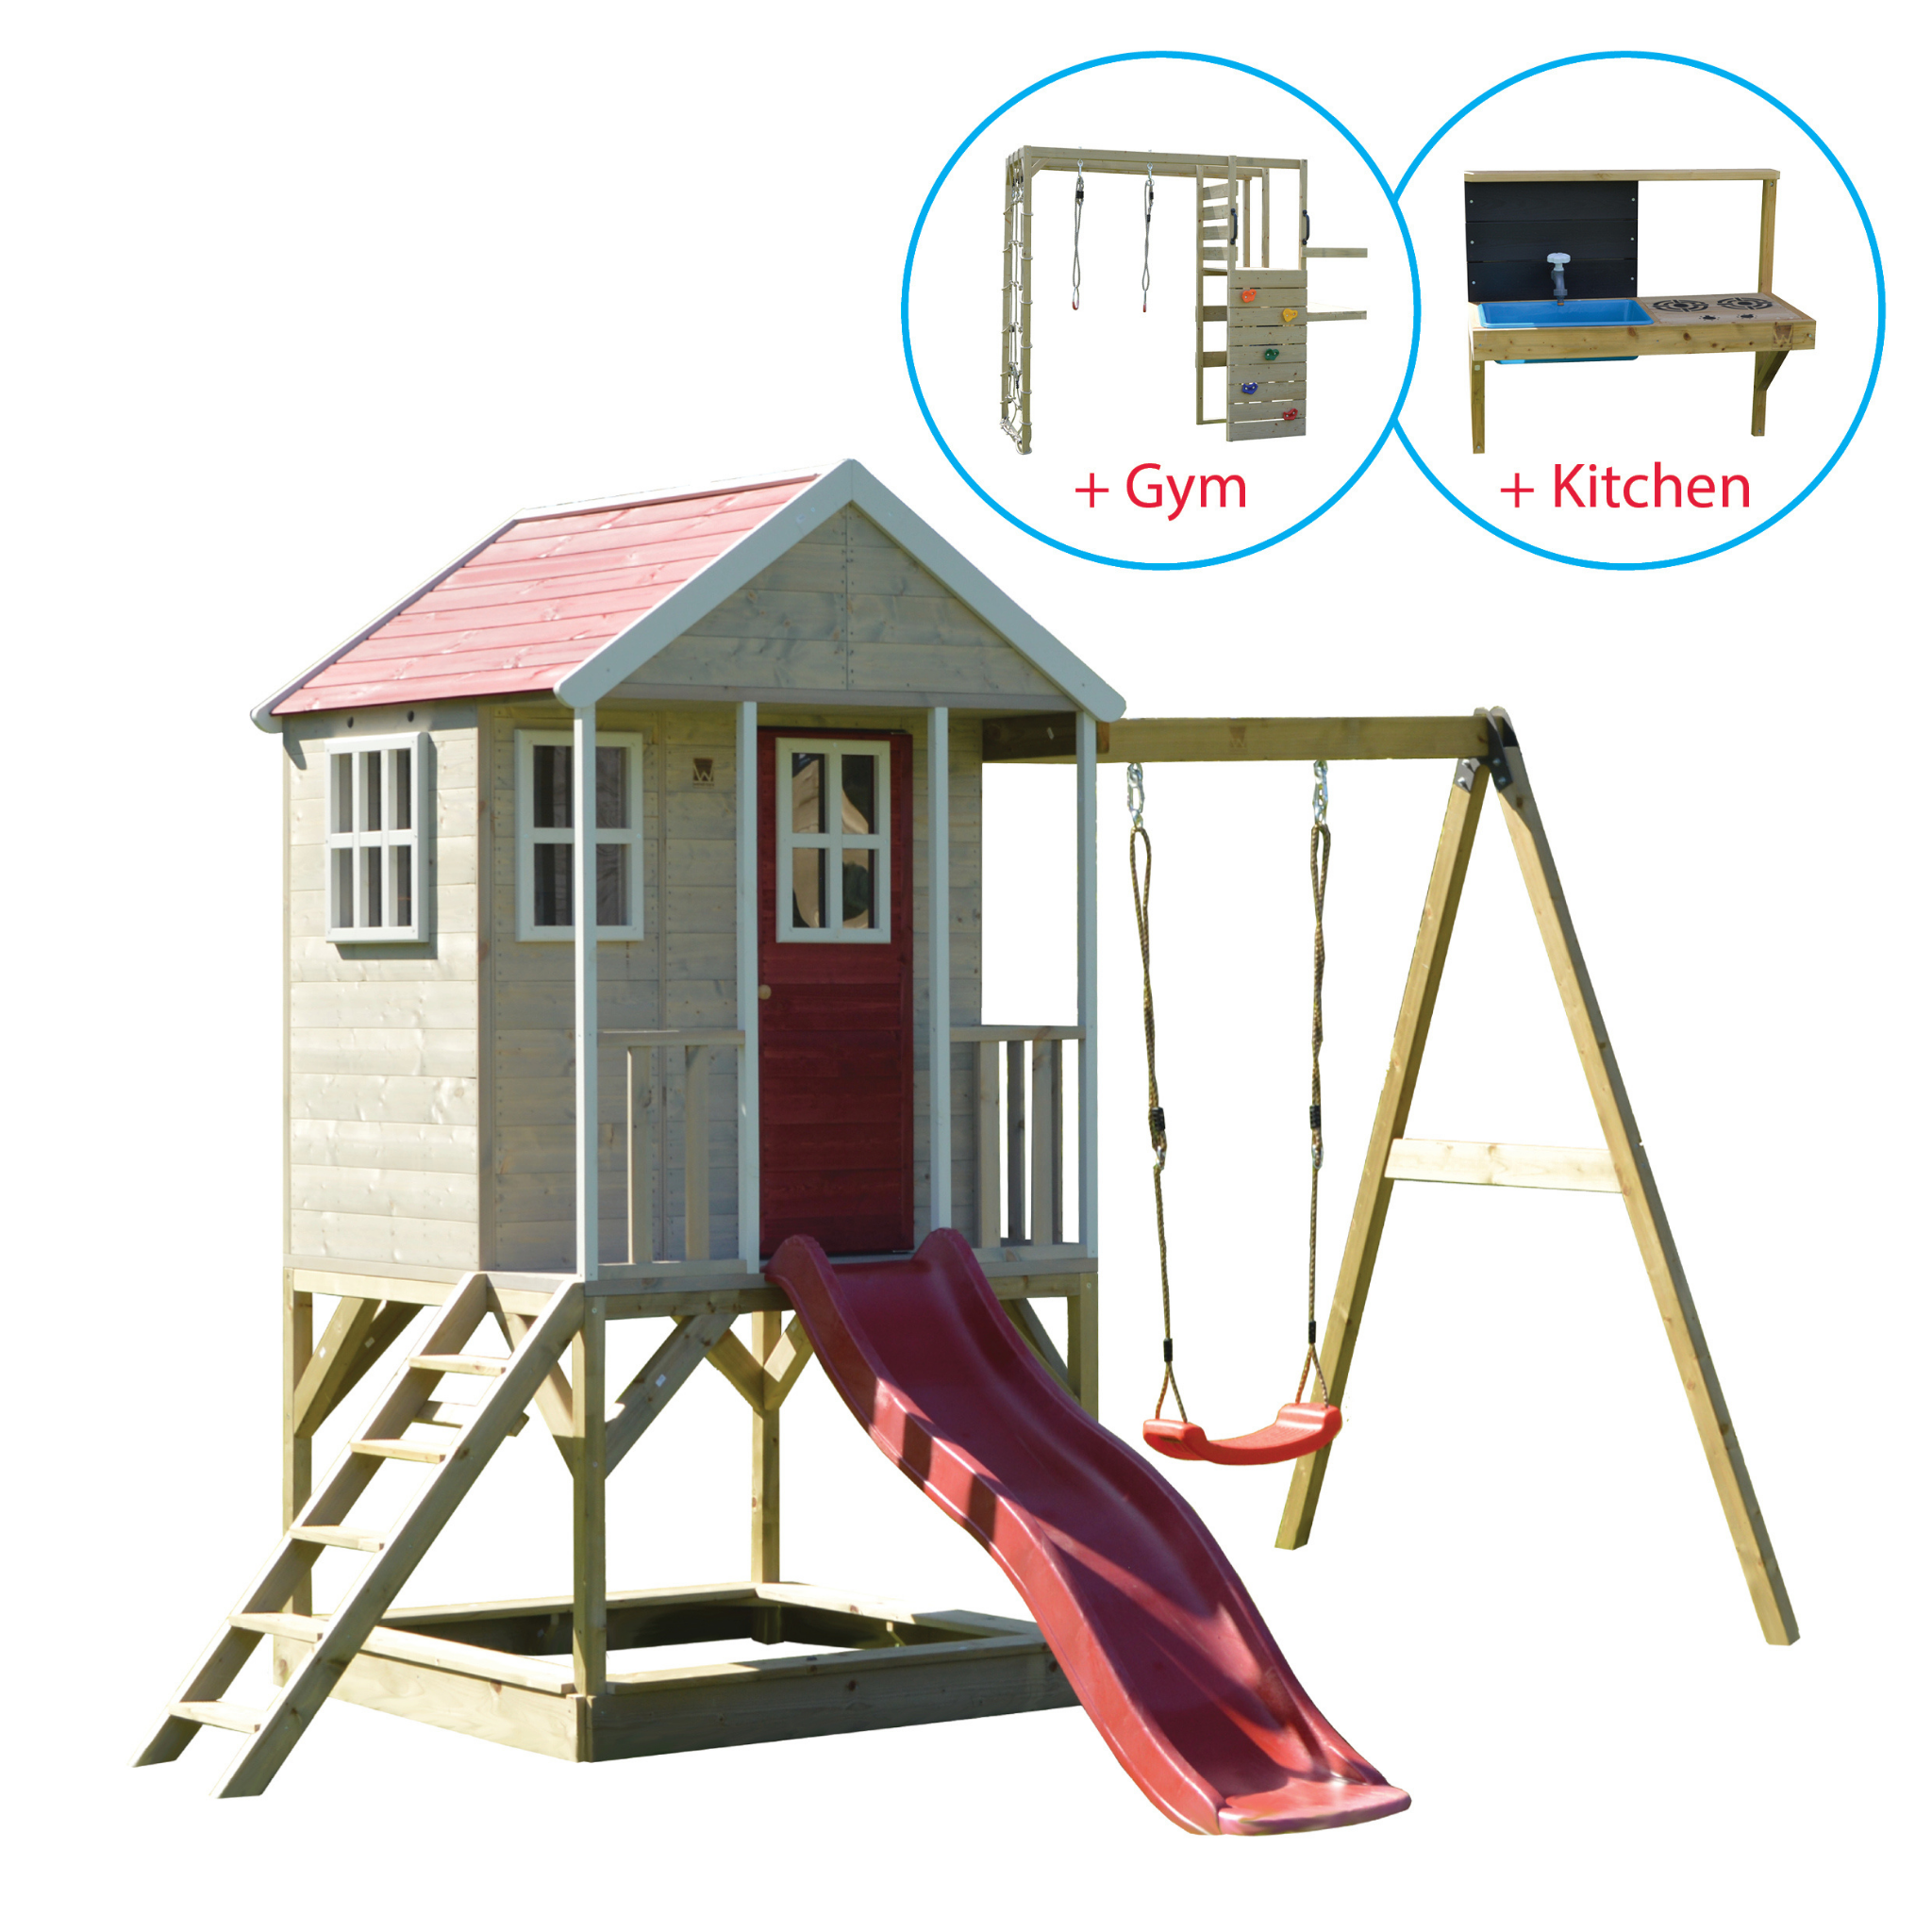 M10R-GK Nordic Adventure House with Platform and Slide + Gym & Kitchen Attachment